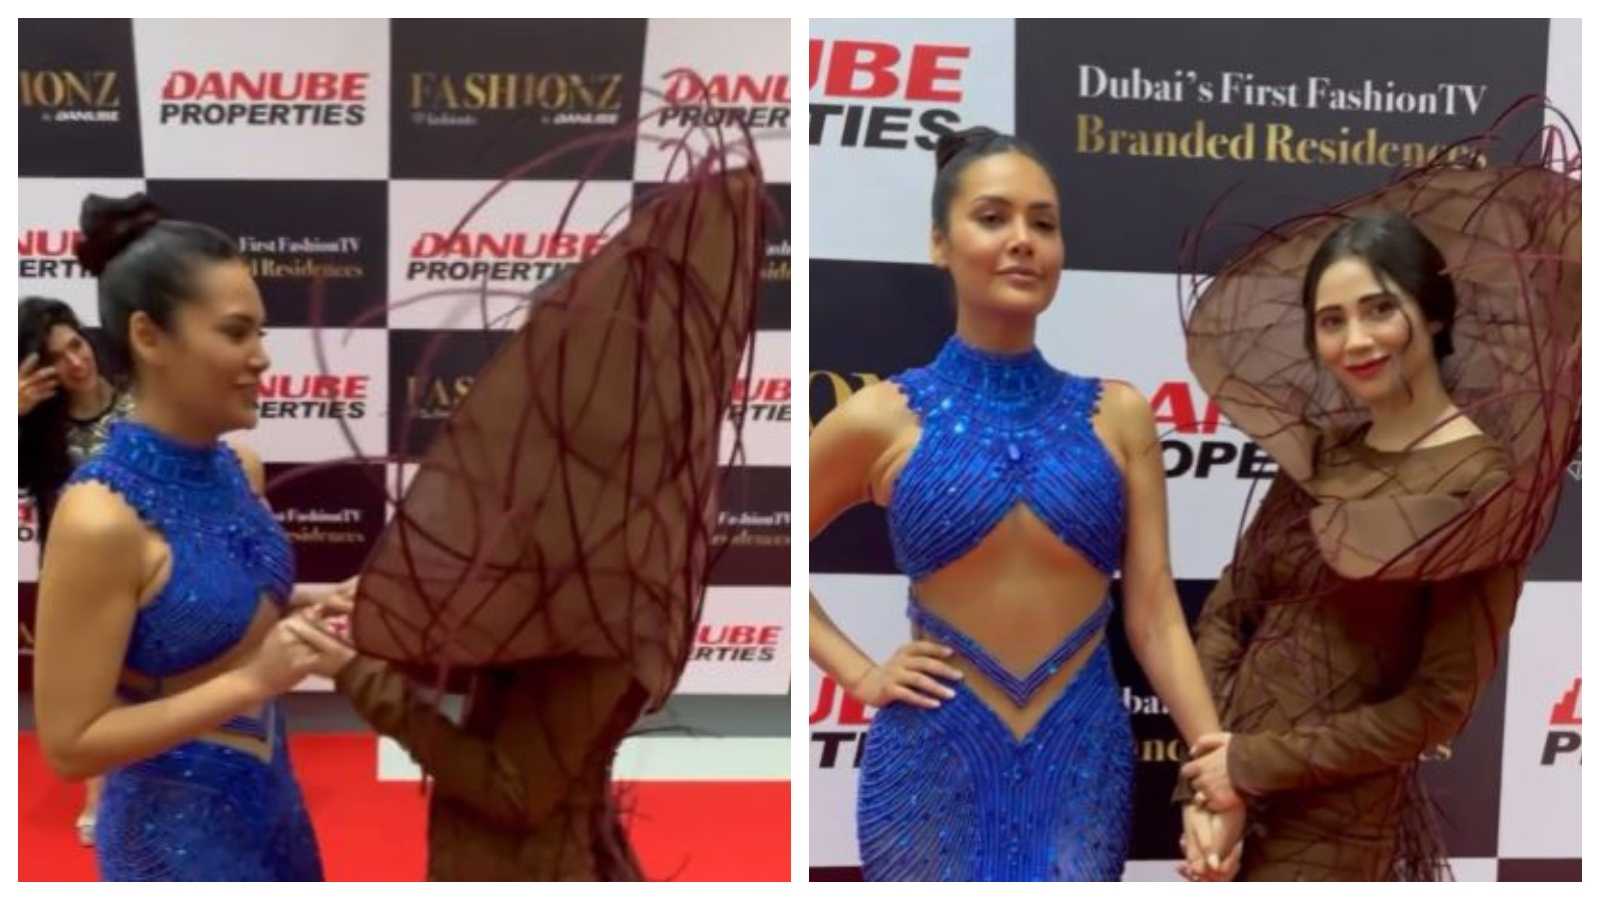 'Chamgadad meets chipkali': Singer Zahra Khan posing with Esha Gupta at Dubai fashion event evokes hilarious reactions